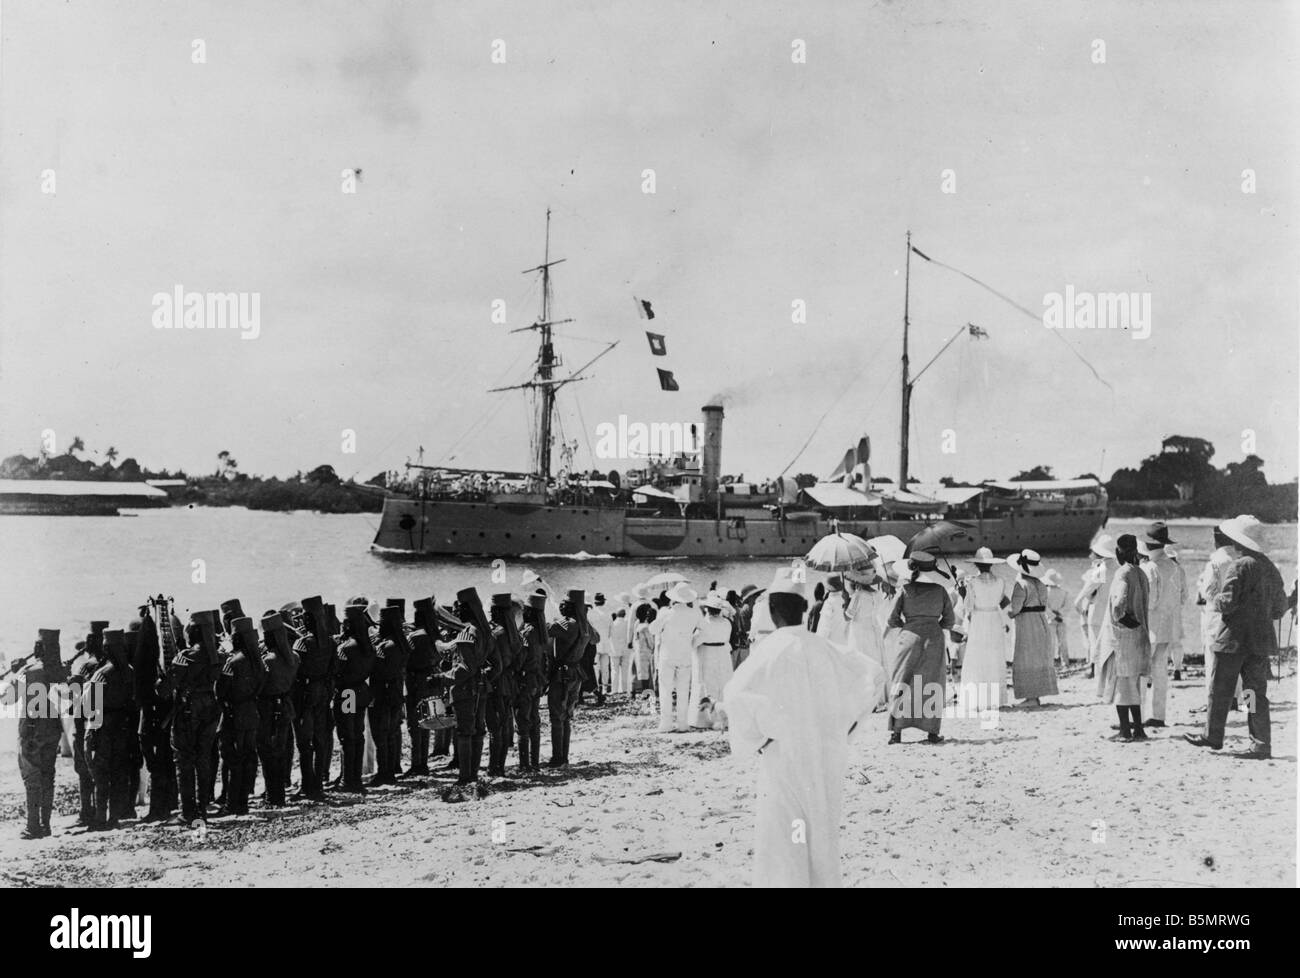 9AF 1914 0 0 A8 1 E S M S Seeadler Dar es Salaam Foto est tedesco Afica oggi in Tanzania come colonia tedesca 1884 1920 S M S Seeadle Foto Stock